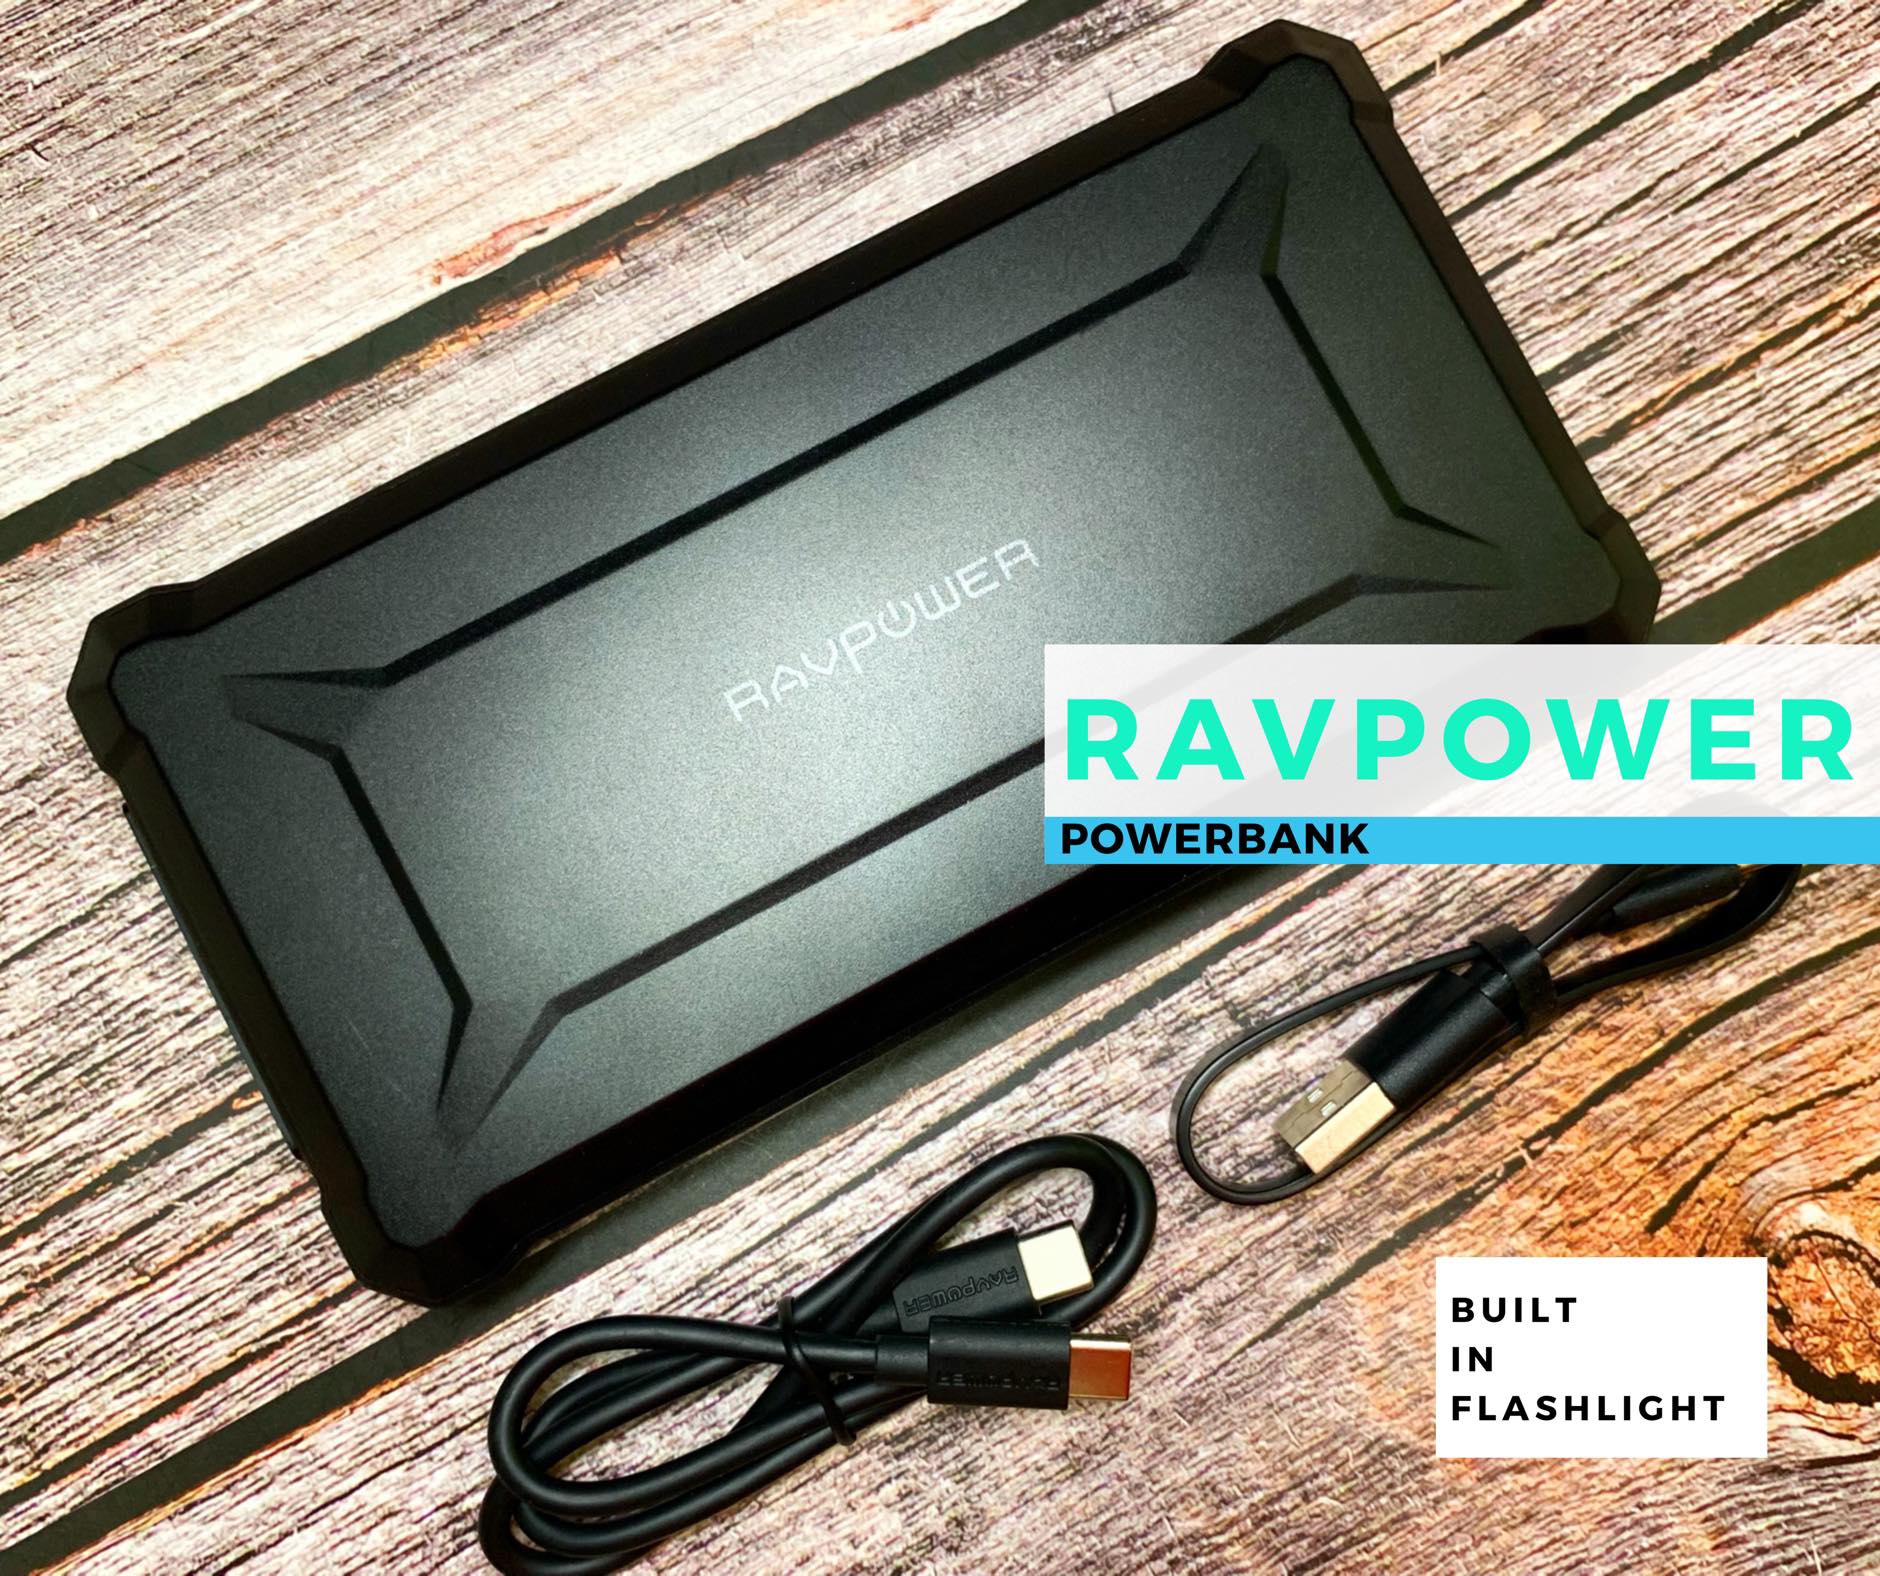 Ravpower 鋼鐵系列 – Amazon 行動電源推薦第一品牌、支援 PD3.0 快充輸出